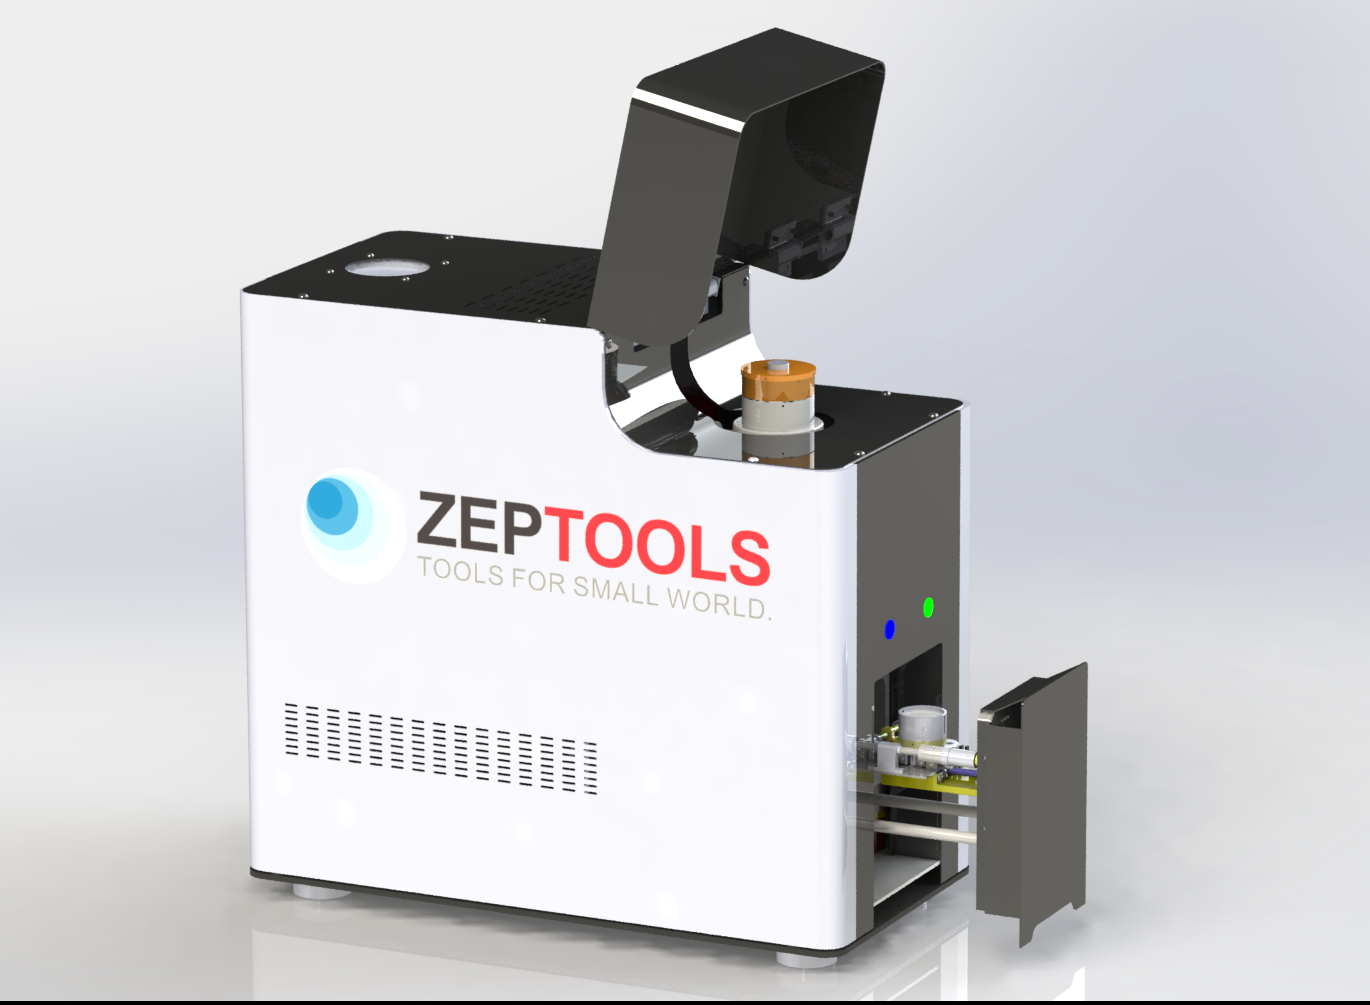 ZEM15台式扫描电镜是国产的吗？